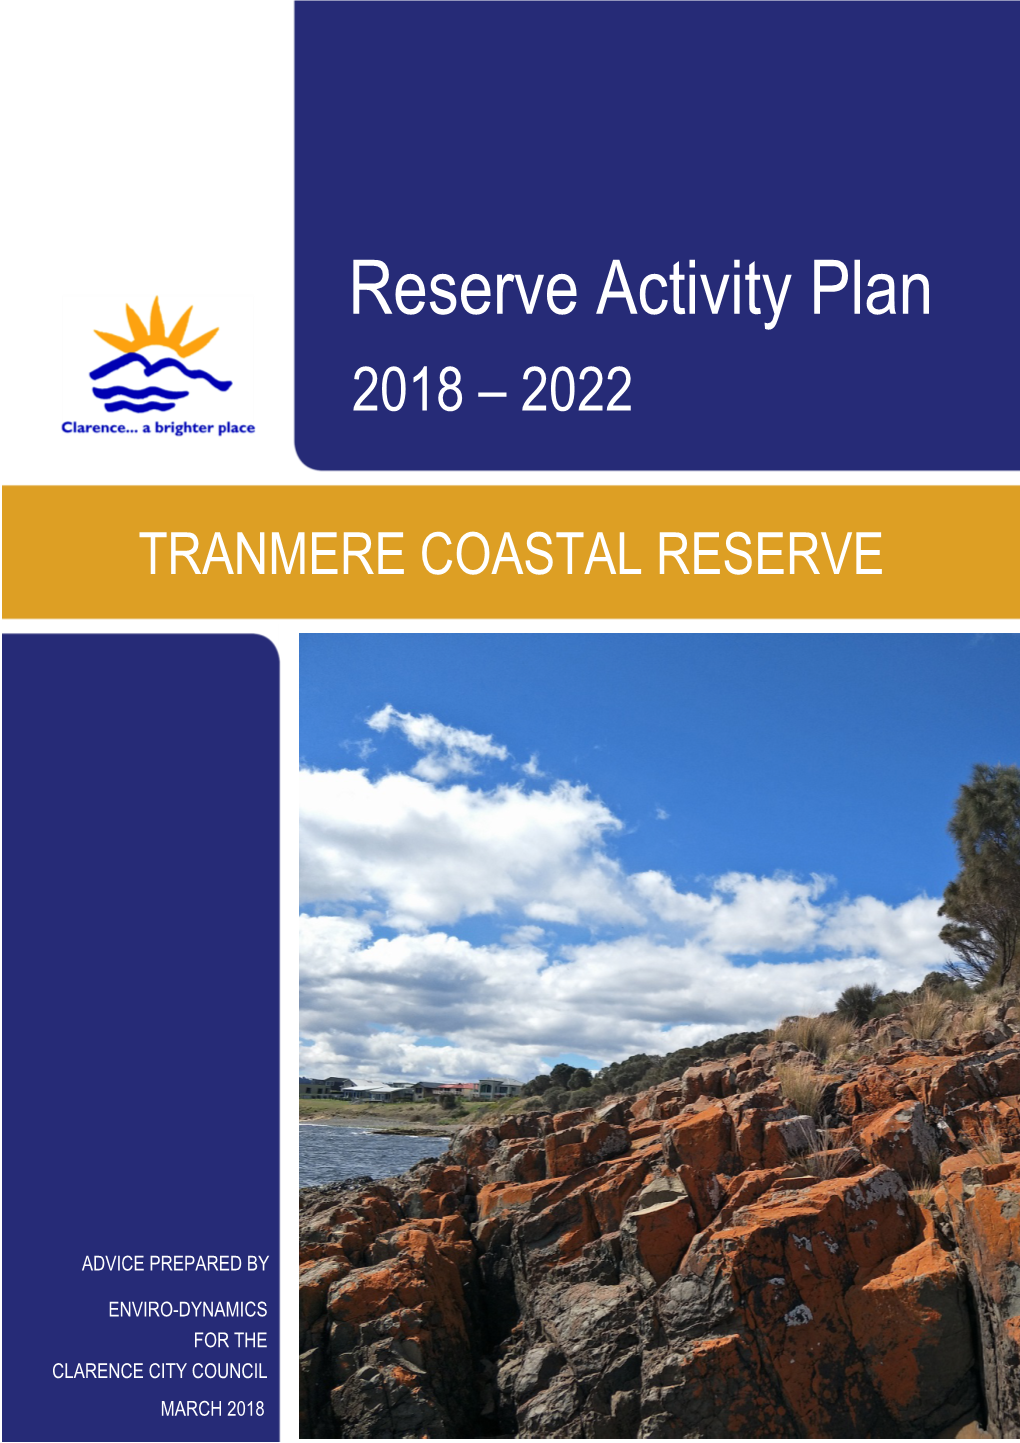 Tranmere Coastal Reserve Activity Plan 2018-2022